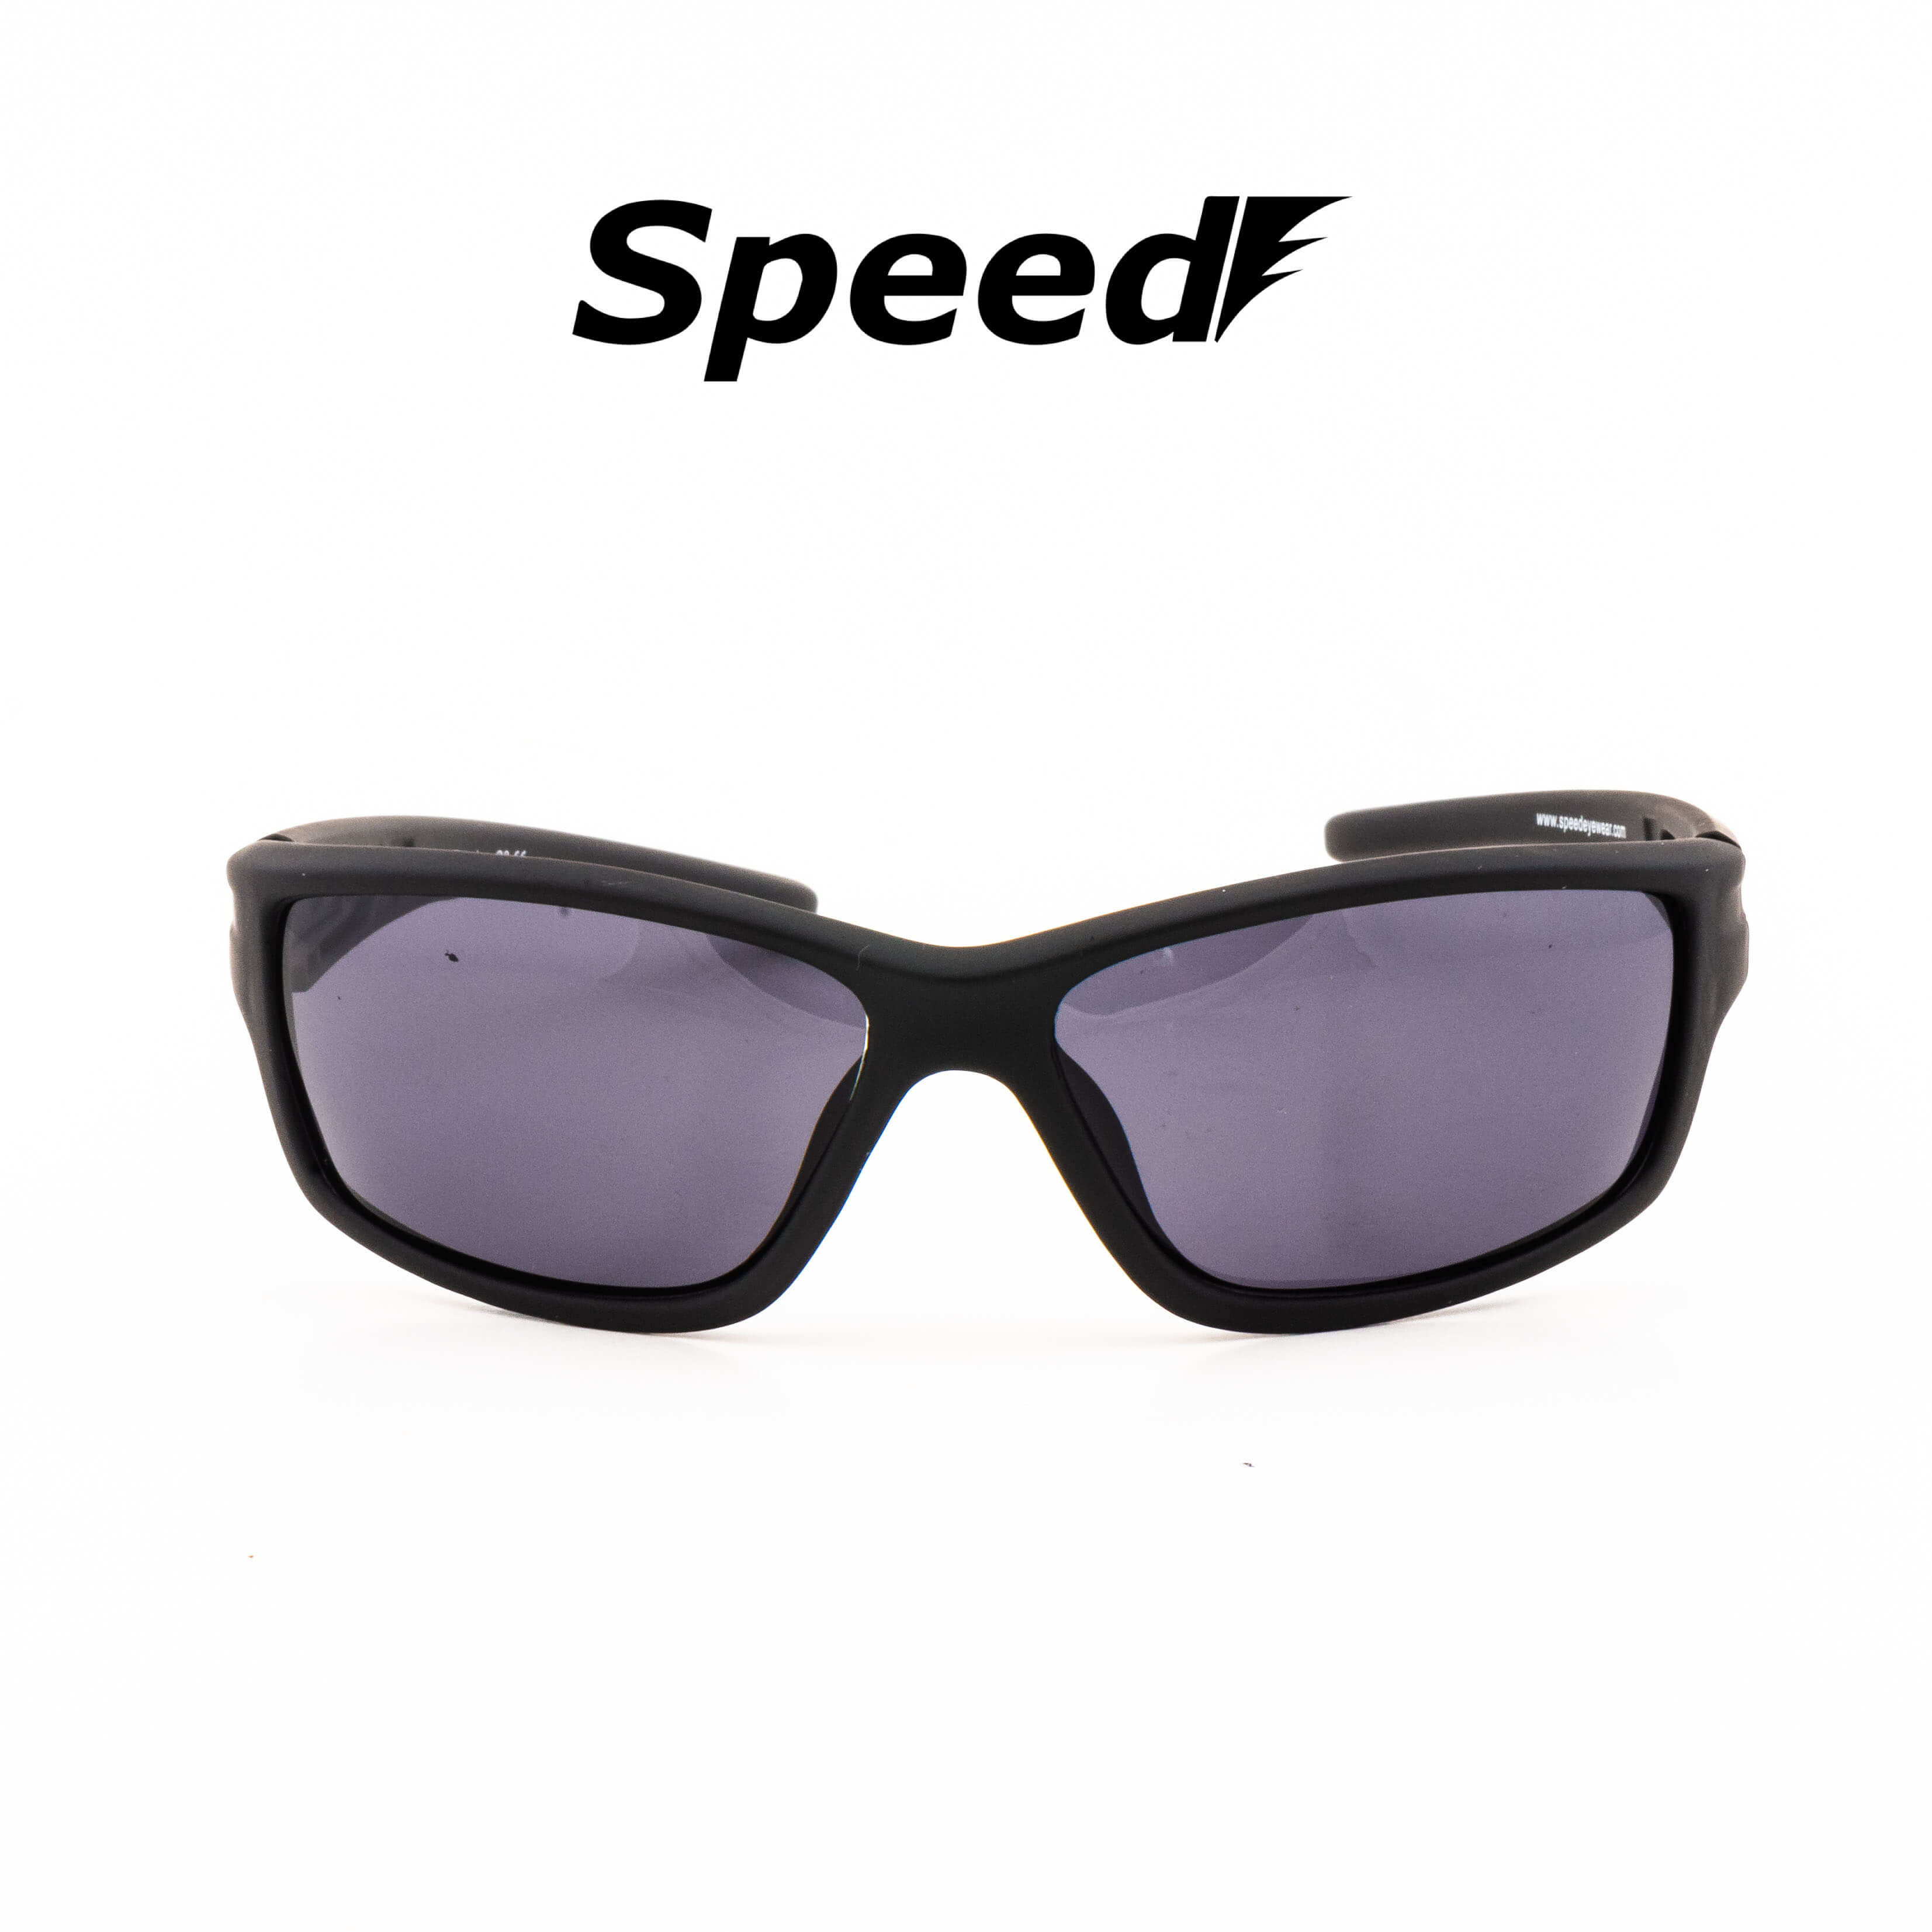 Speed Men's Sports Sunglasses Polarized White Russian C2